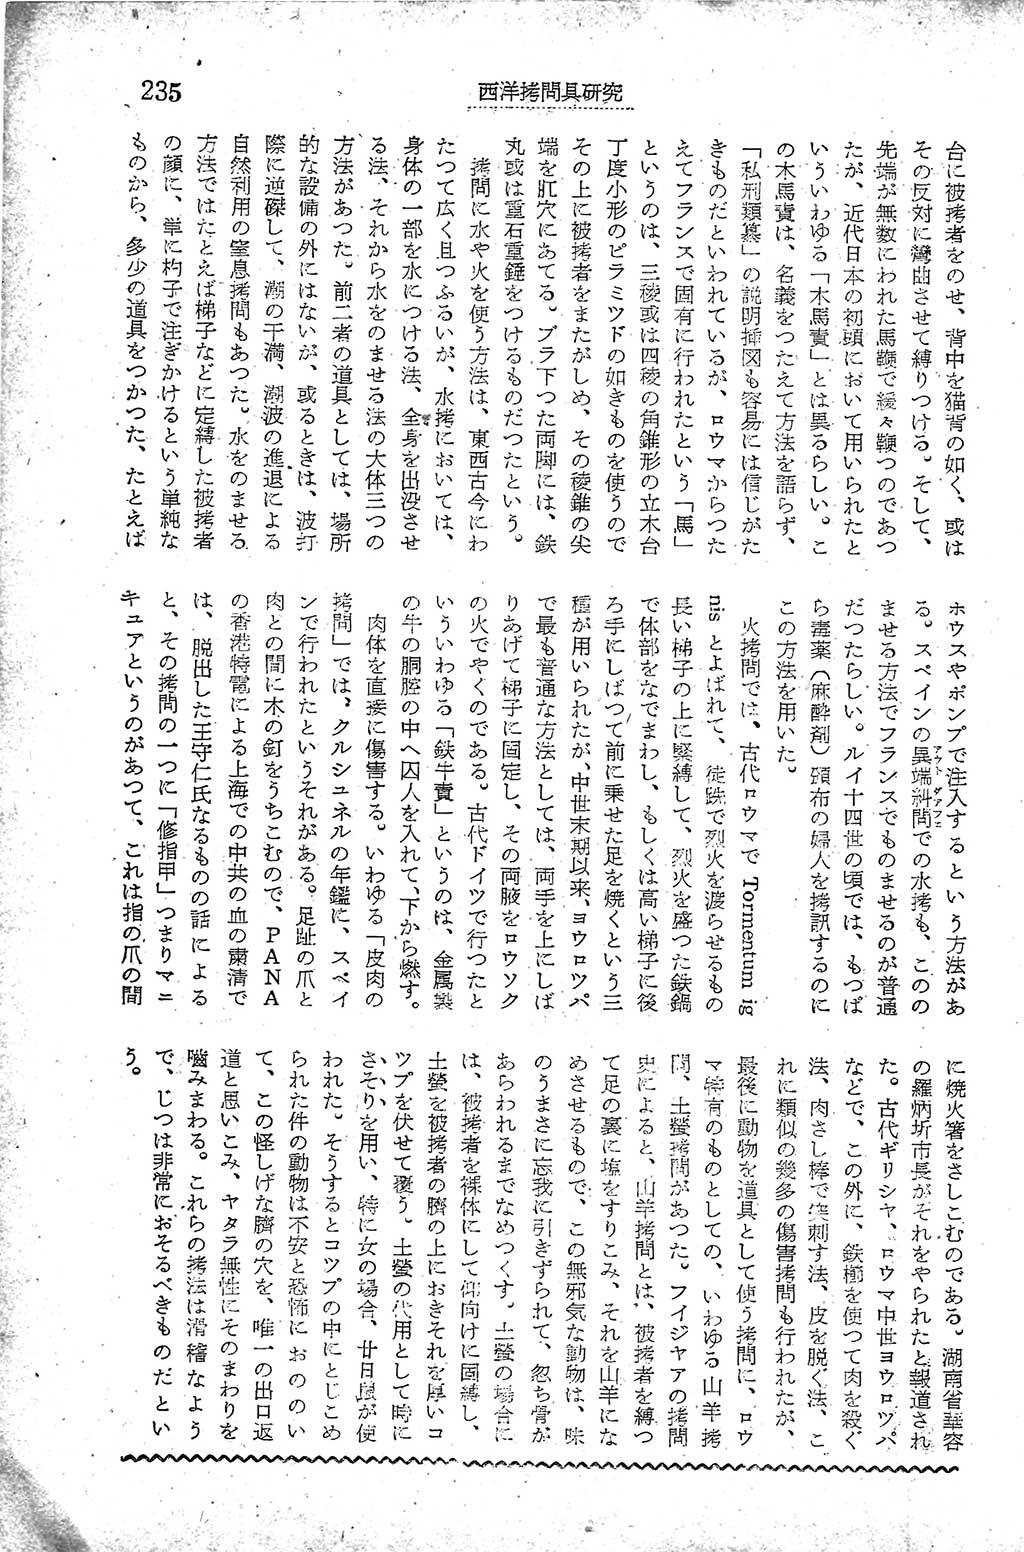 PAGE235.jpg